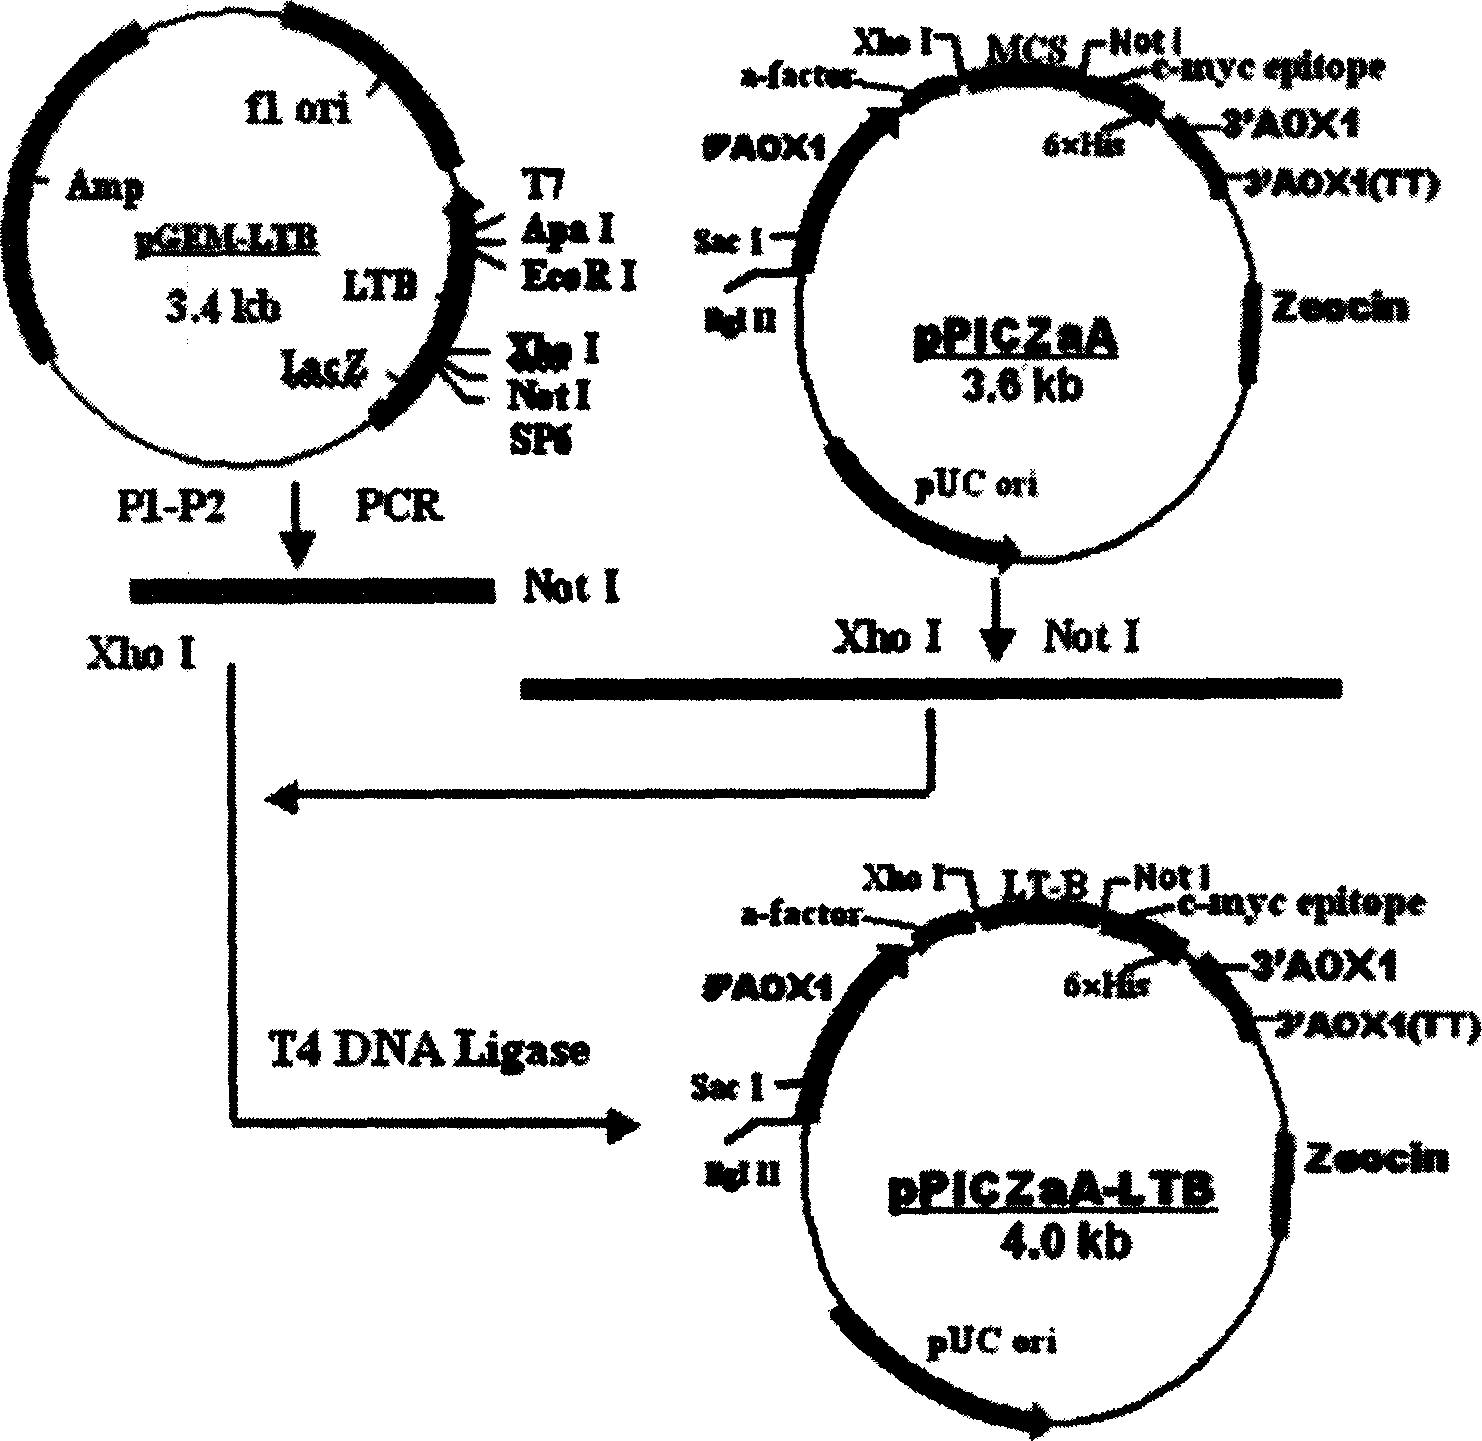 Eukaryon expression of coli heat-sensitive toxin B subunit